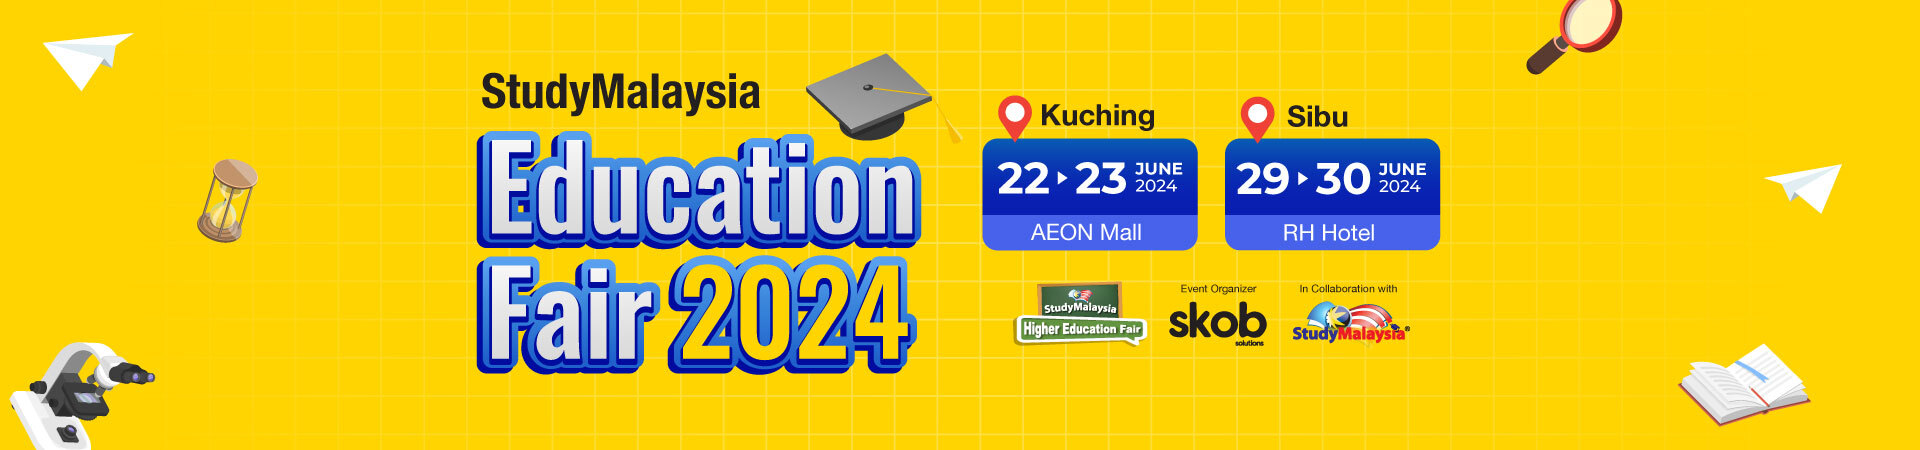 StudyMalaysia Higher Education Roadshow 2024